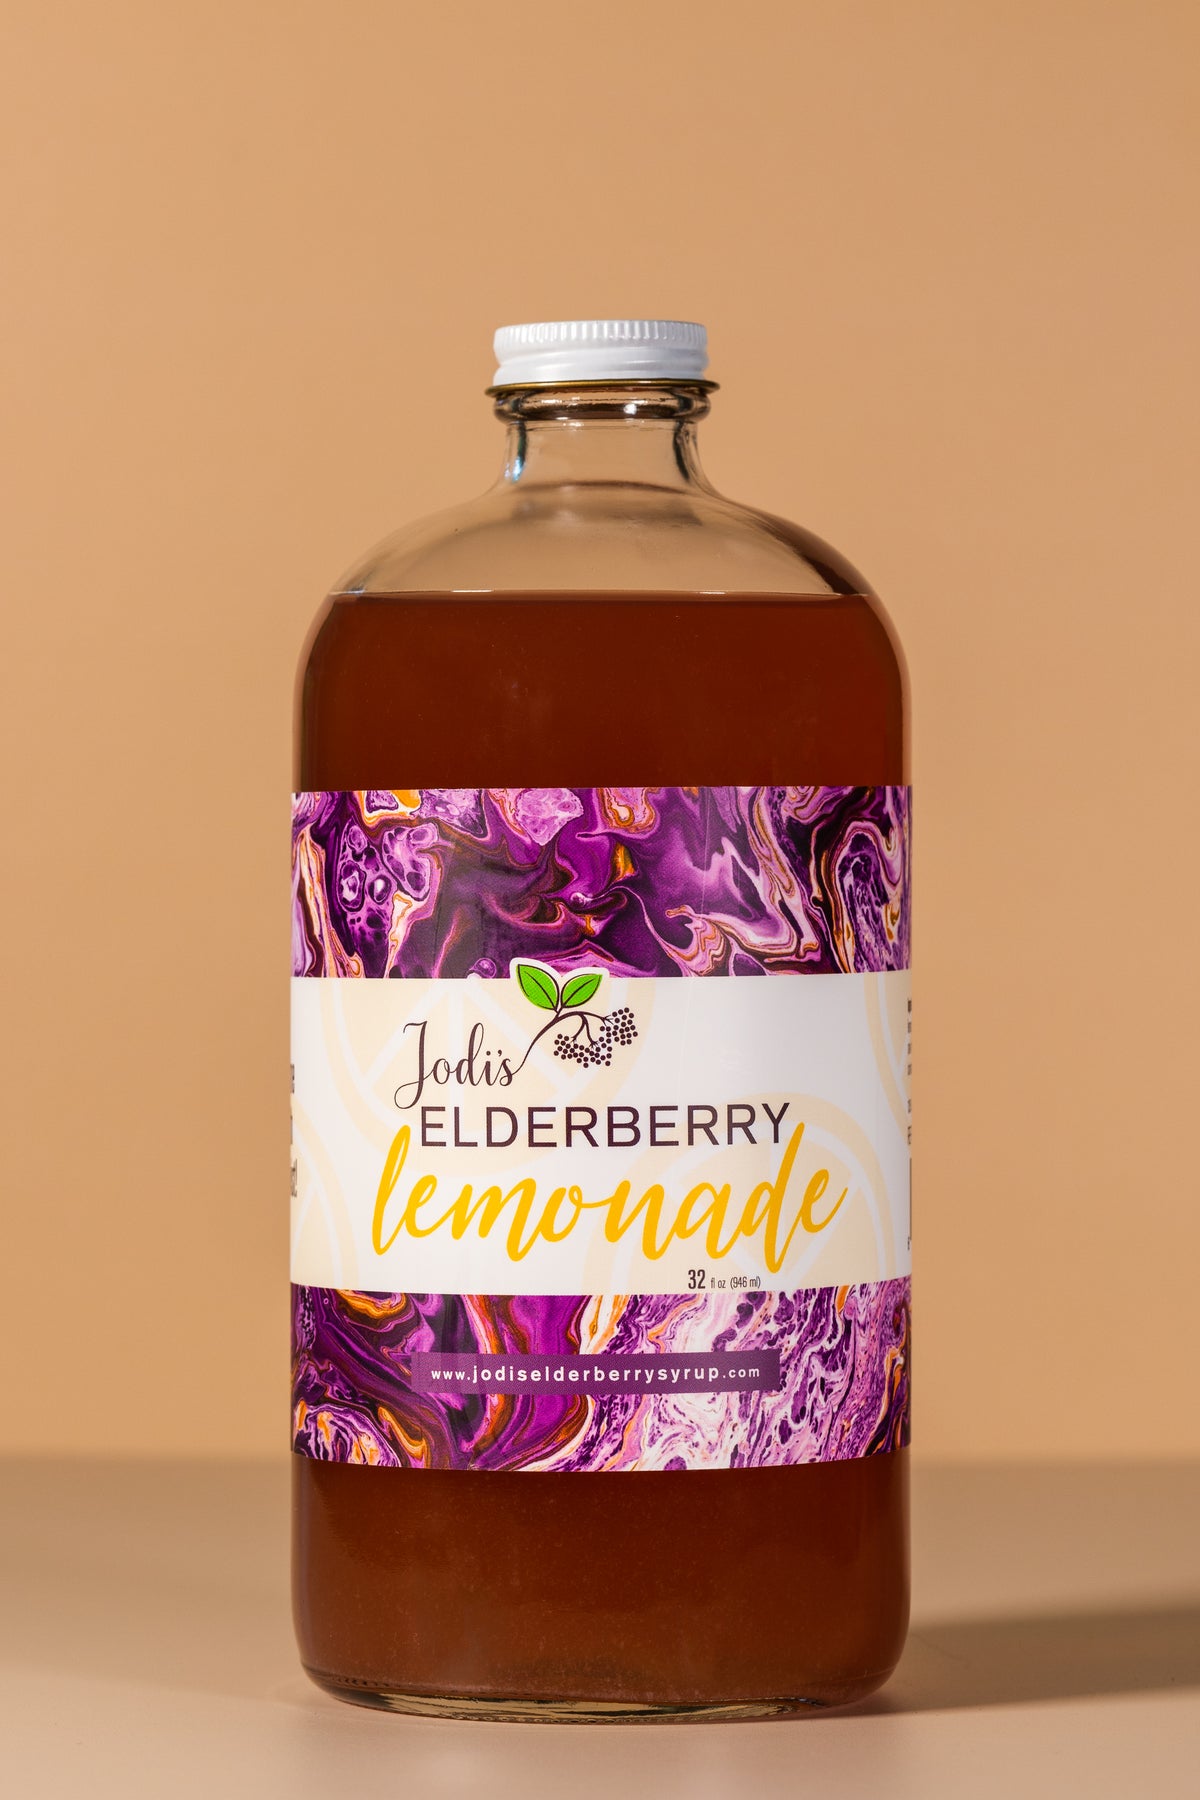 Jodi's Elderberry Lemonade